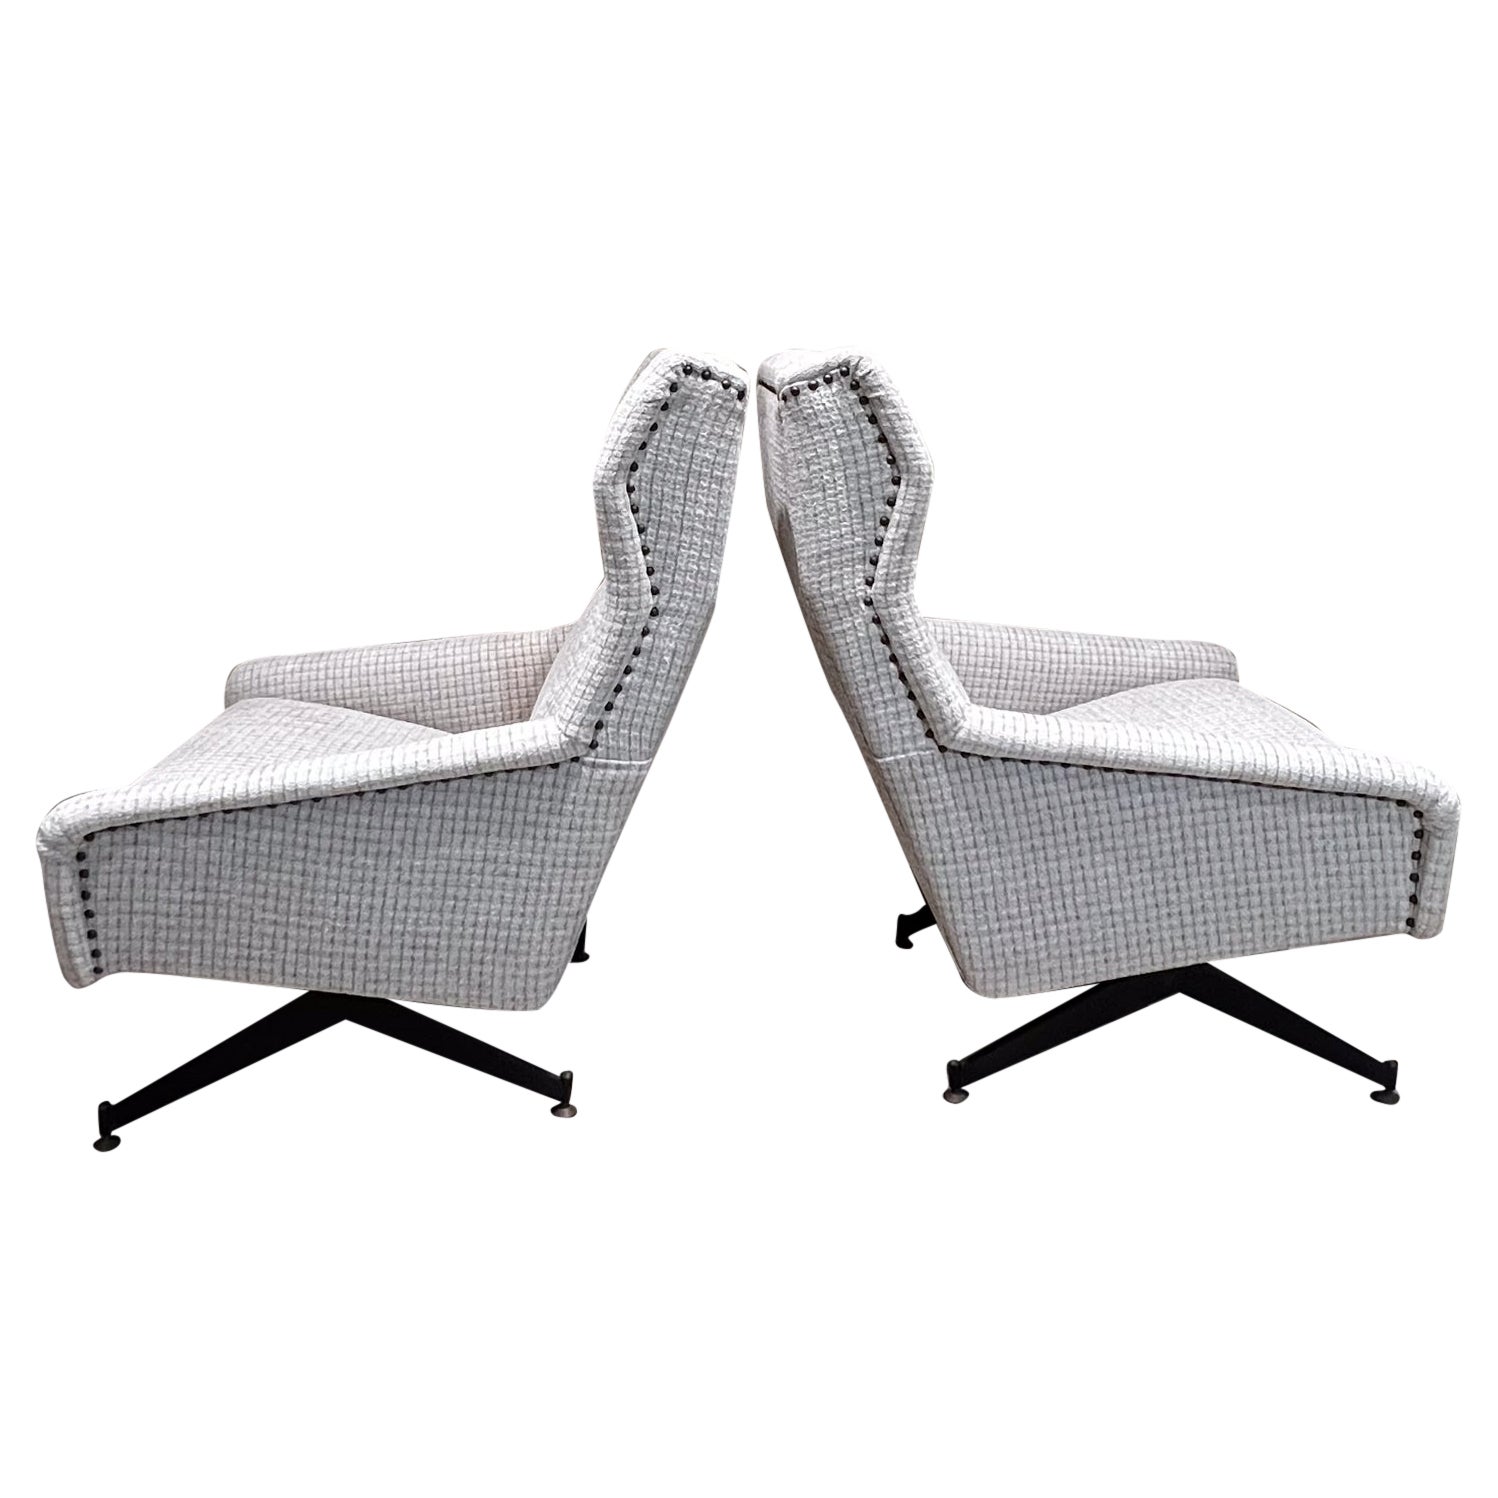 1960s Nello Pini for Novarredo Lounge Chairs Milan Italy